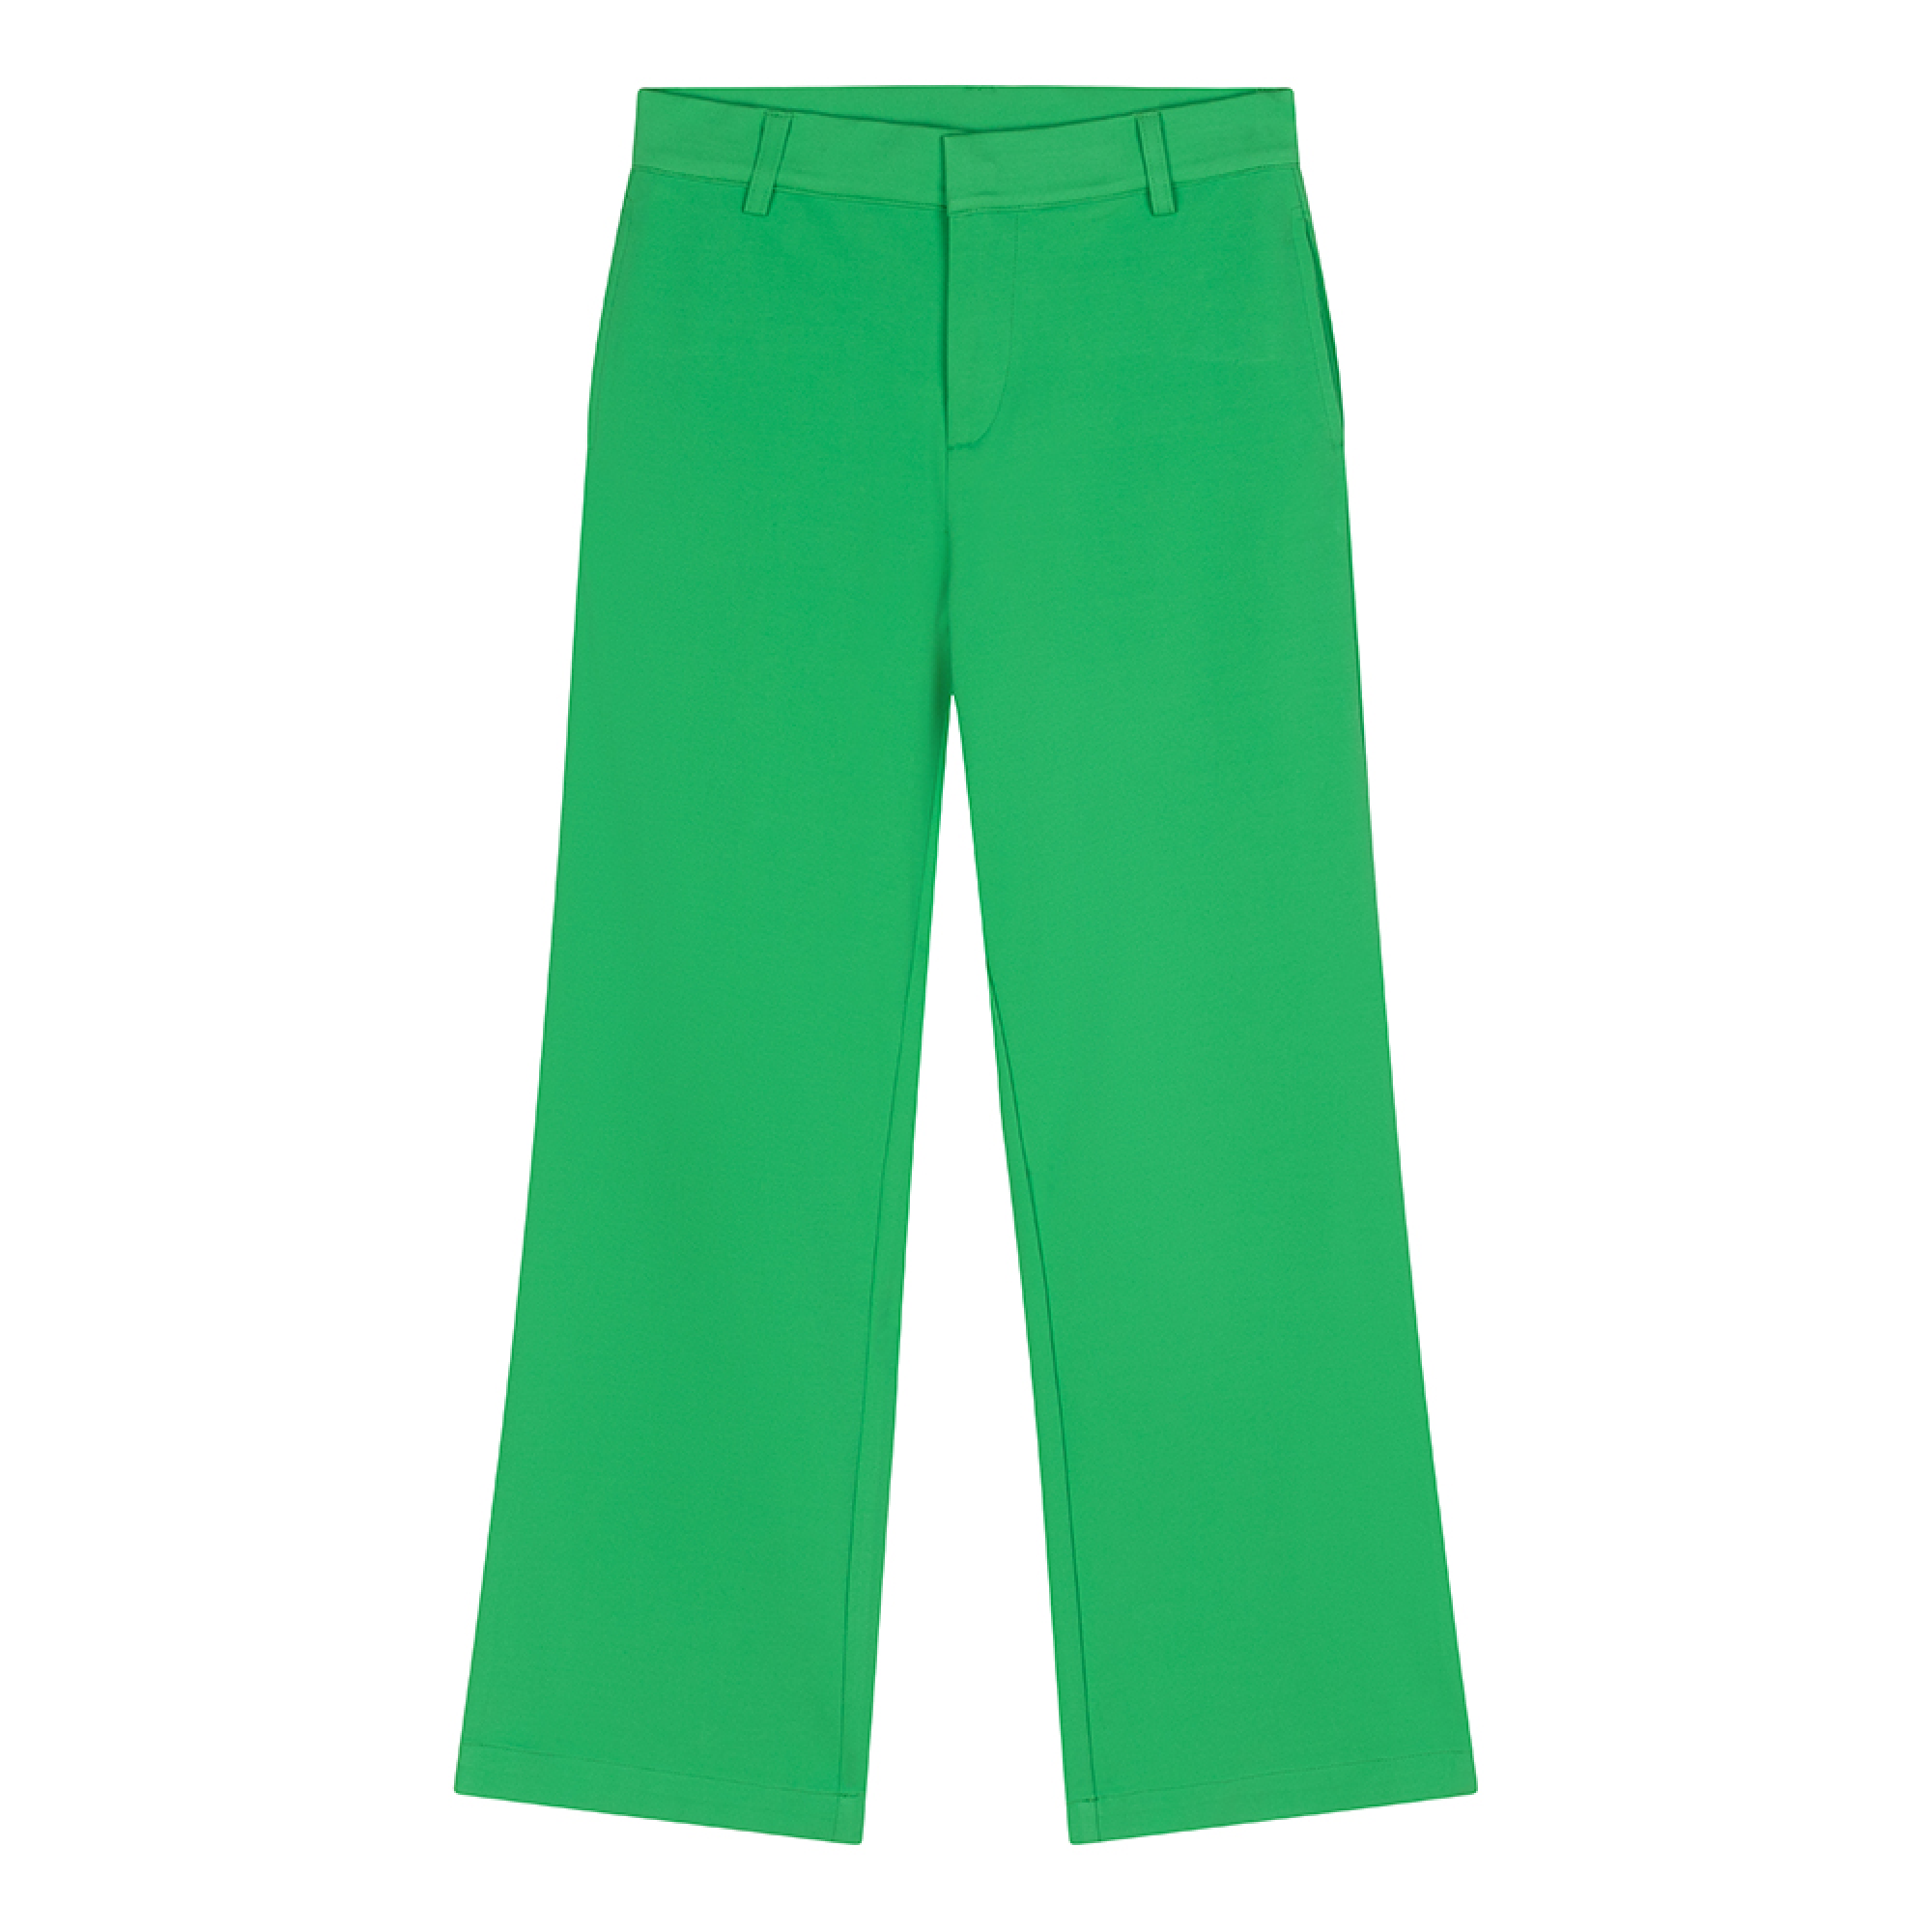 Meisjes Wide Pants Pantalon van Indian Blue Jeans in de kleur Ming green in maat 176.